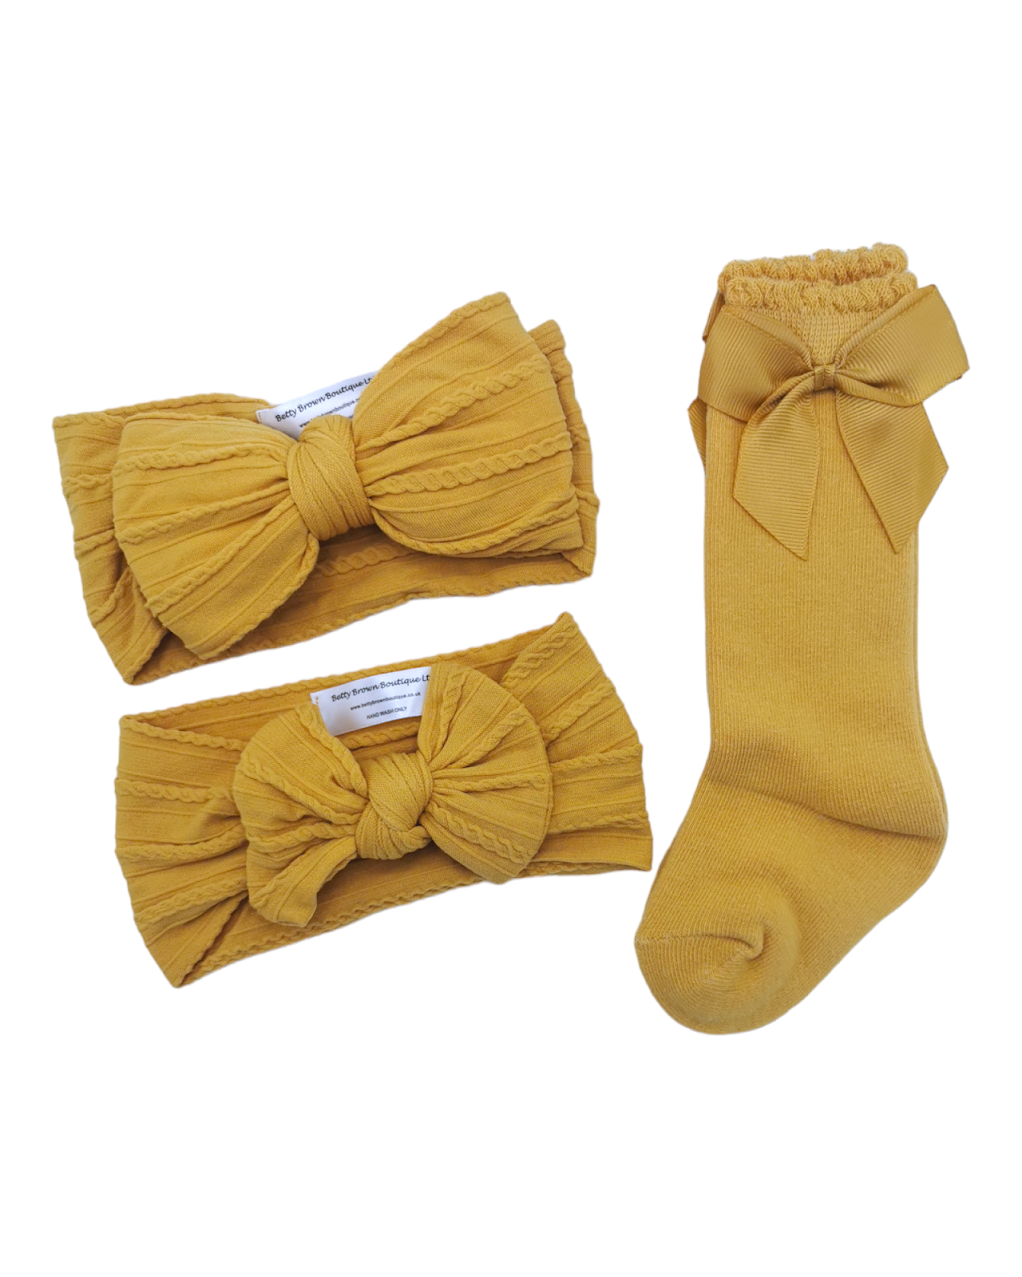 Our Dandelion Larger, Smaller Headwrap & Knee High Socks Set - Betty Brown Boutique Ltd